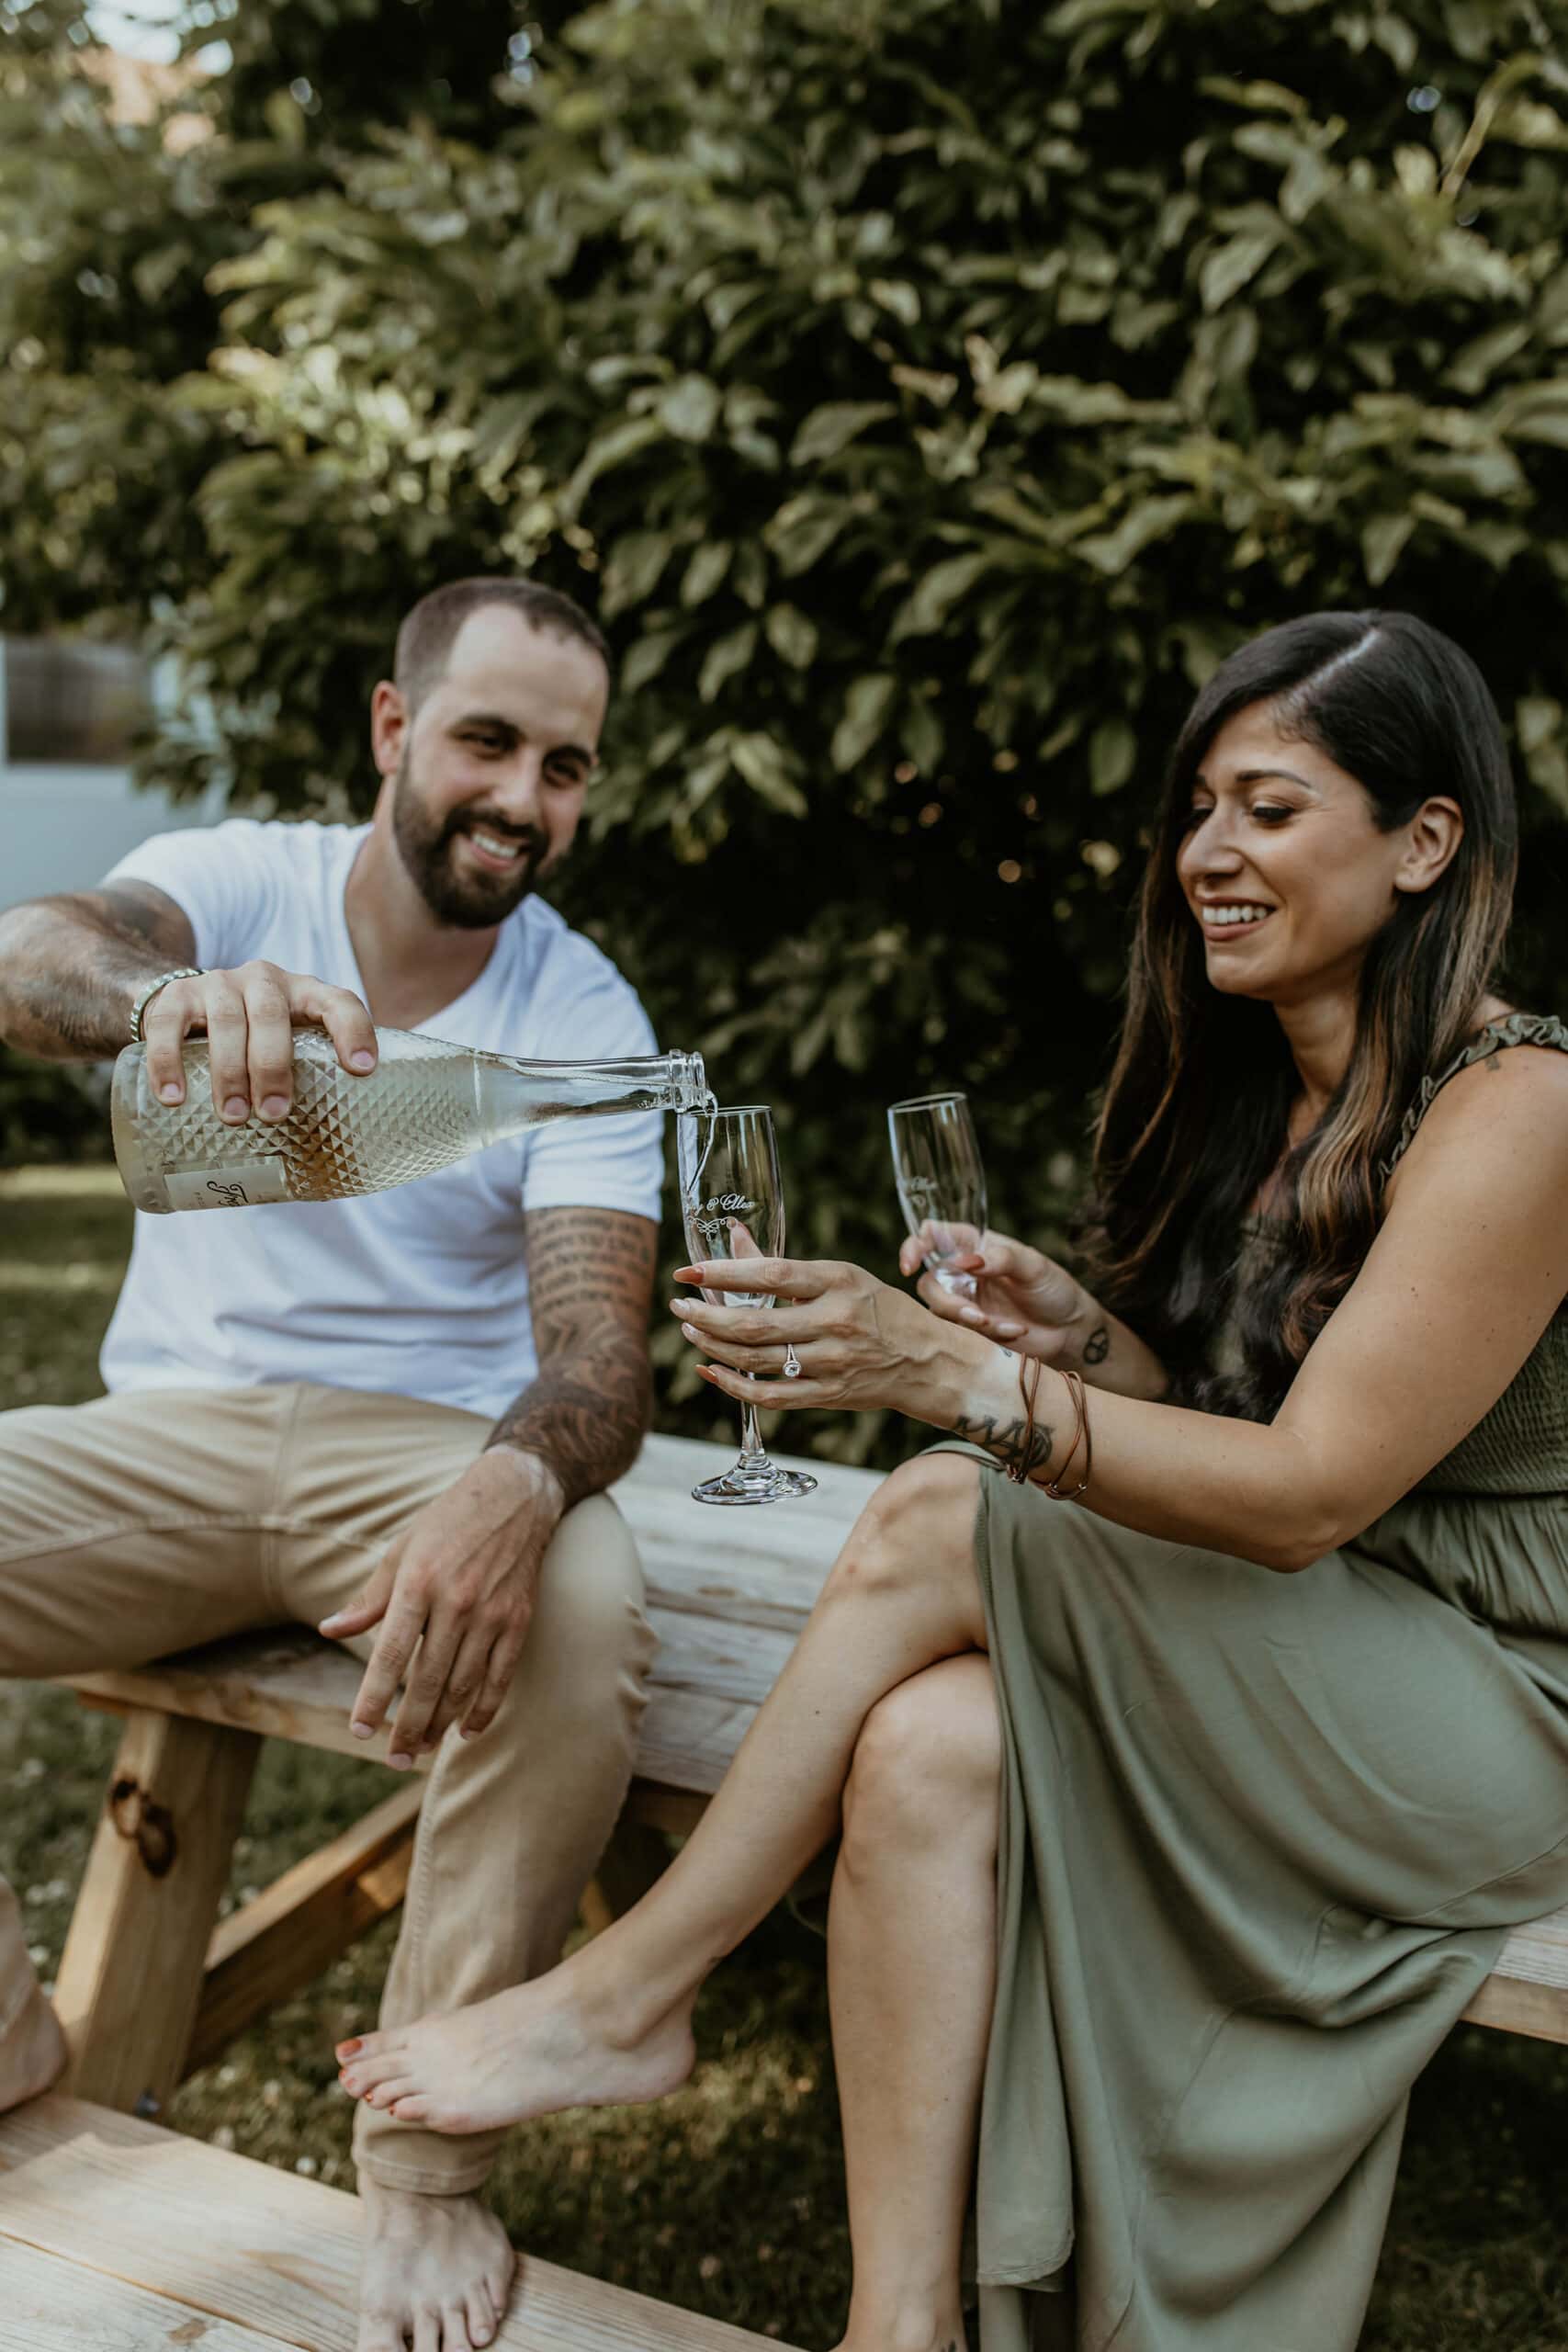 couple sharing wine at a picnic table backyard engagement photoshoot